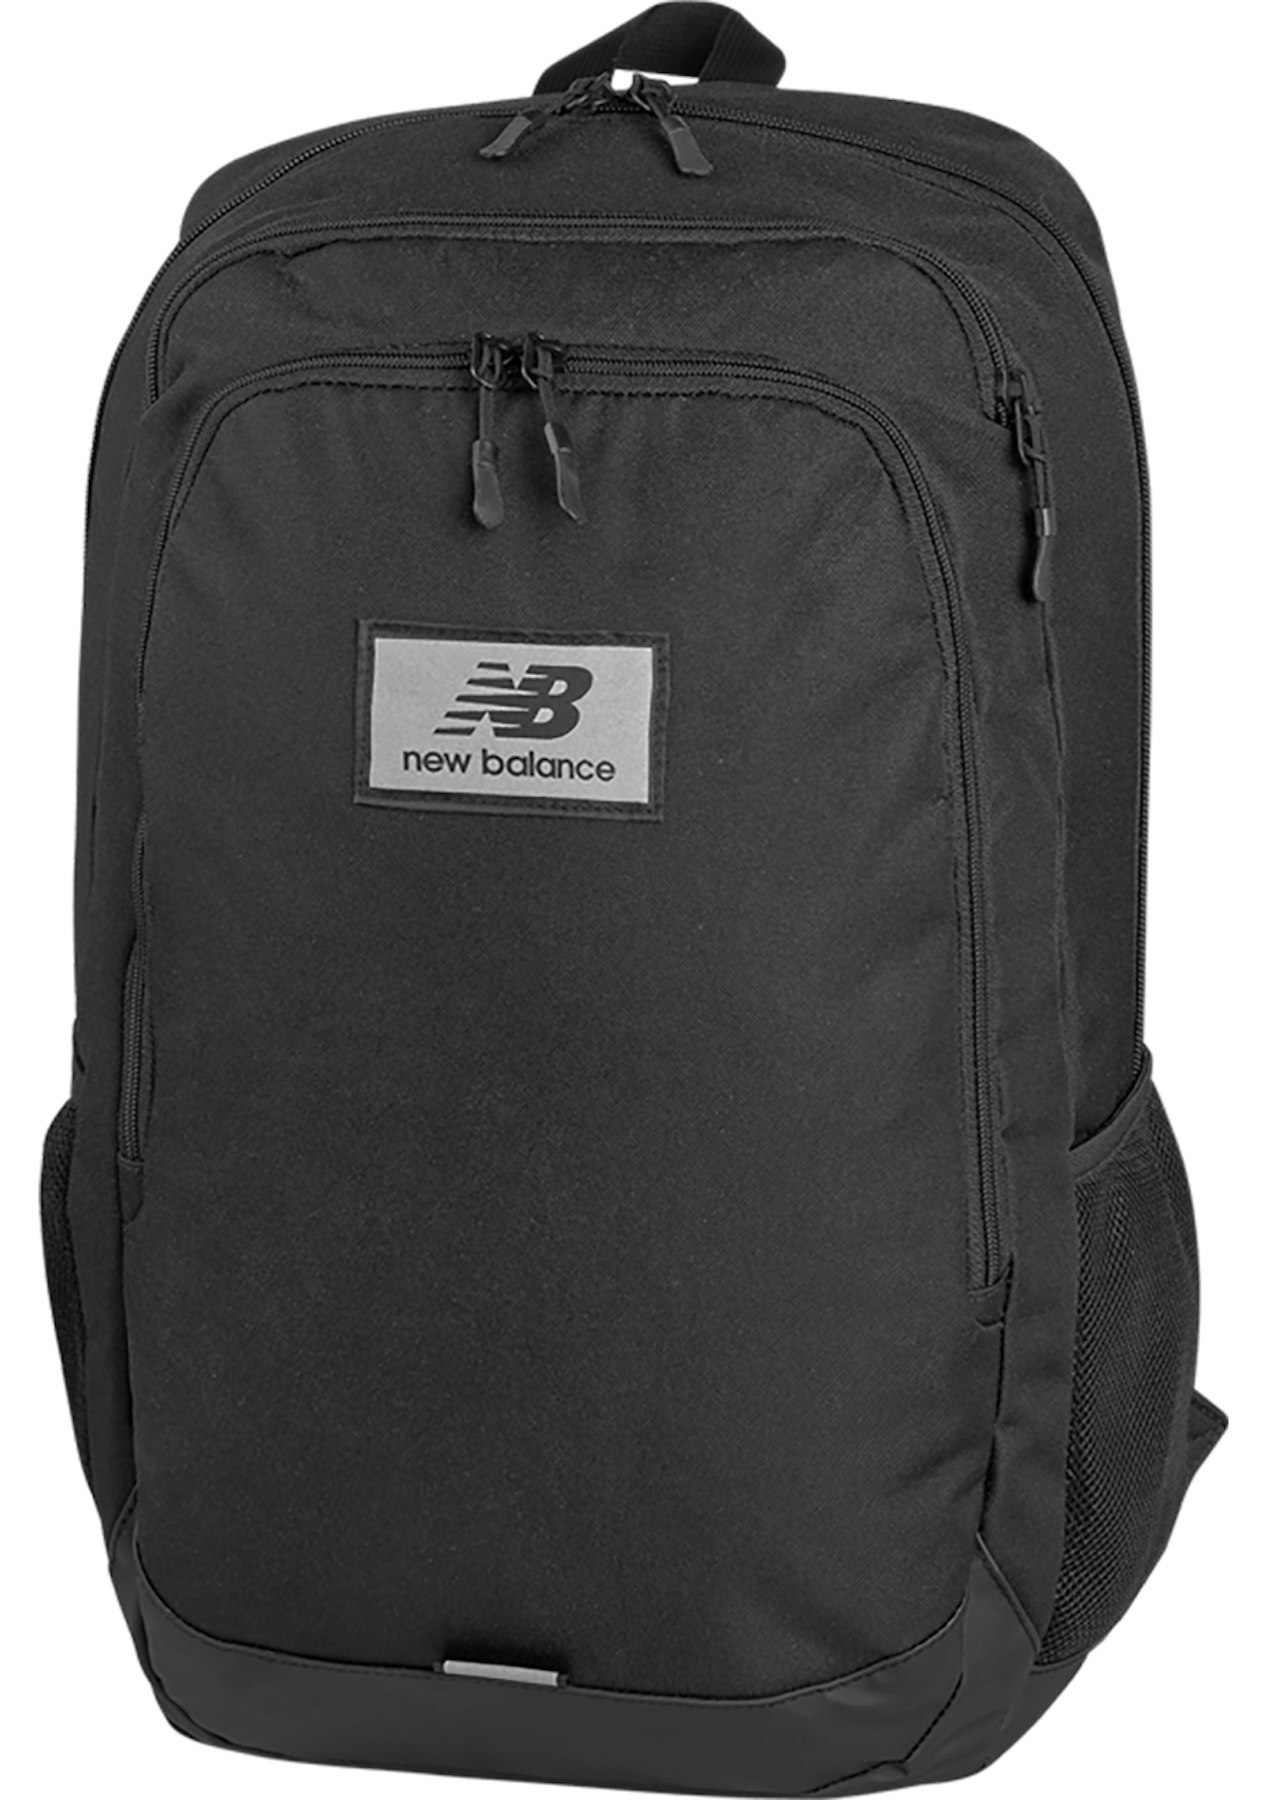 New Balance Backpack Large Black Onceit